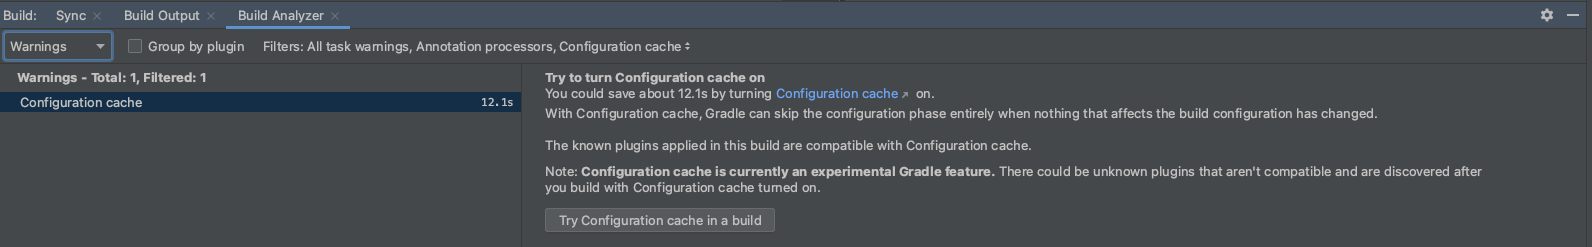 Configuration cache information in Build Analyzer